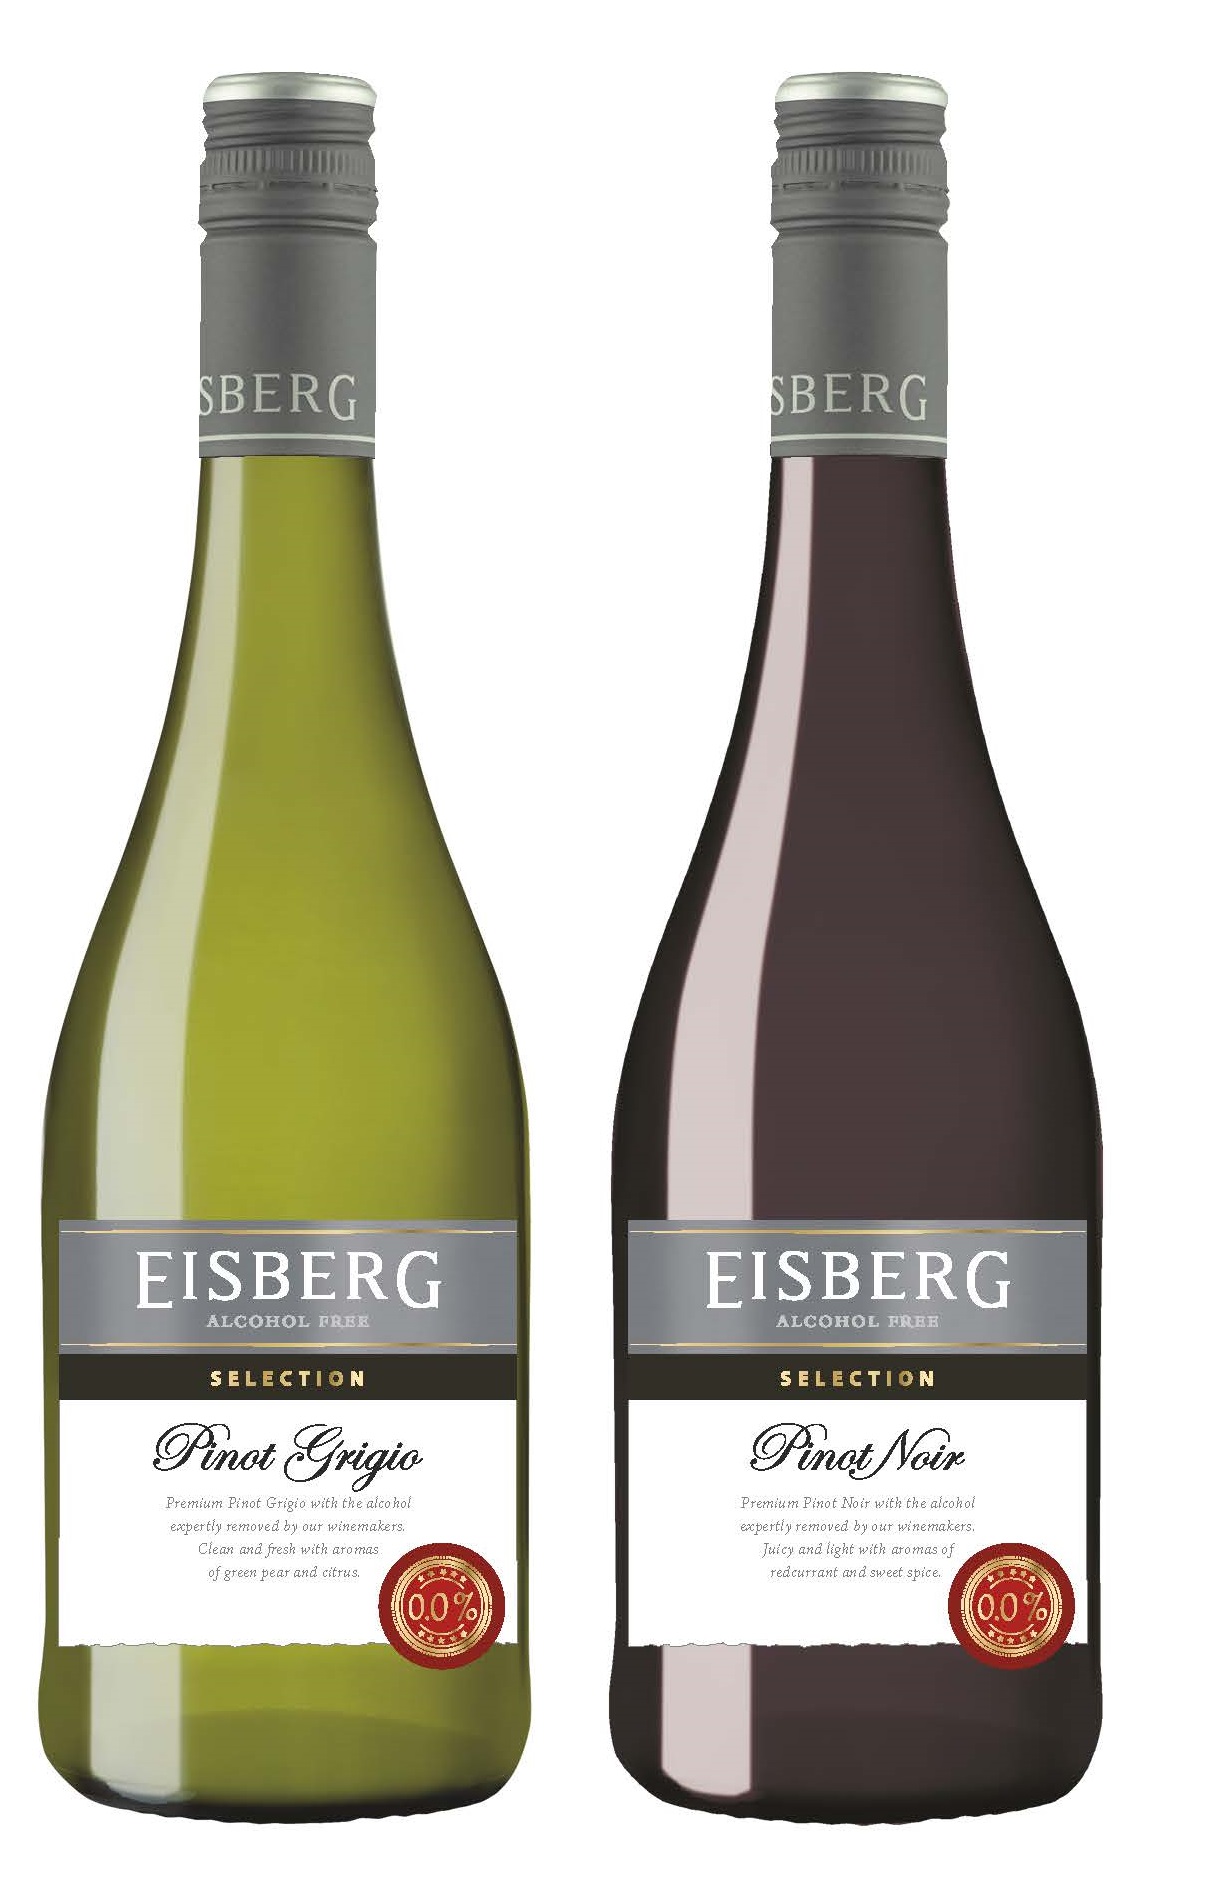 Eisberg launches new premium range of alcohol-free wines